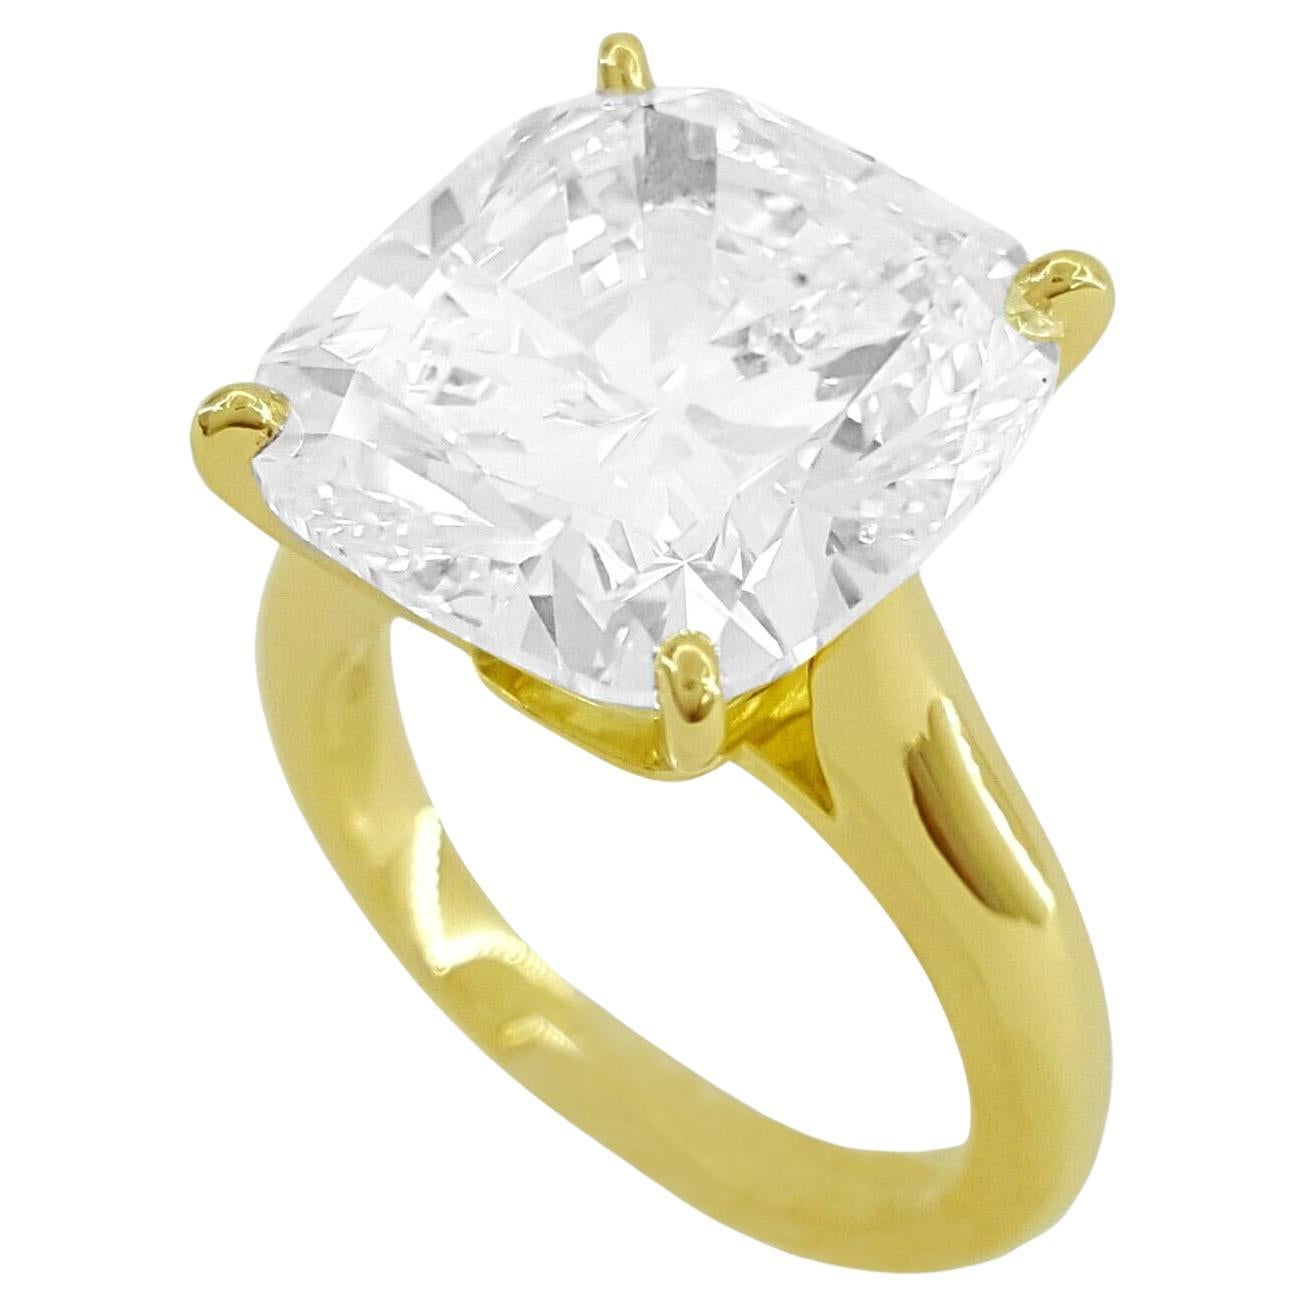  Cartier 1895 Cushion Brilliant Cut Diamond Solitaire Engagement Ring